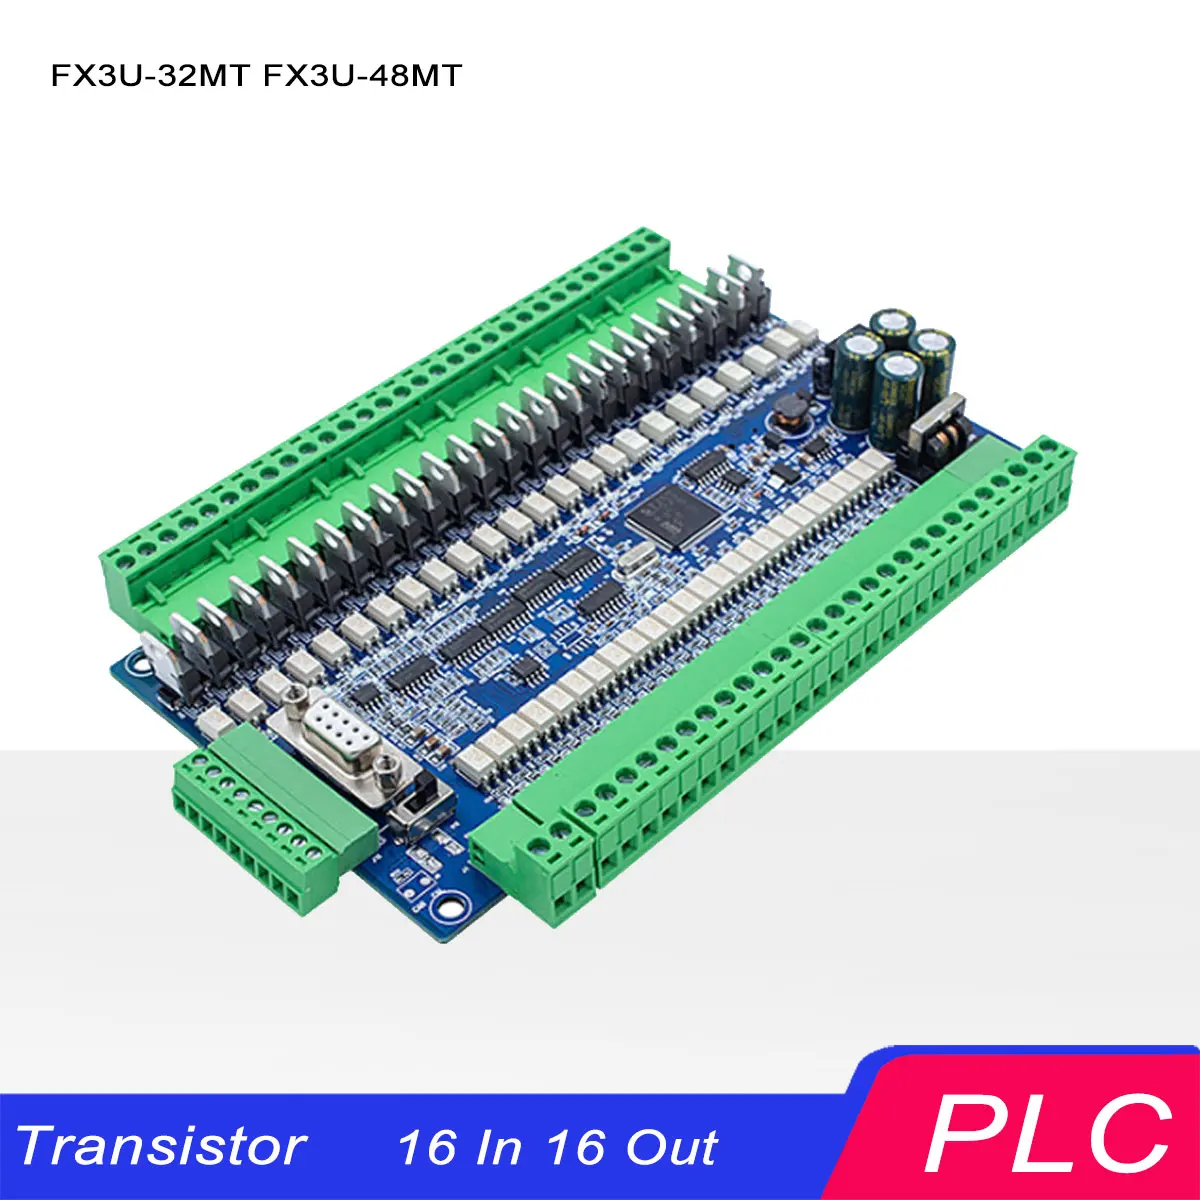 

FX3U-32 MT FX3U-48 MT PLC Programmable Logic Controller Training Starter Programming Kit for Factory Education Home Automation